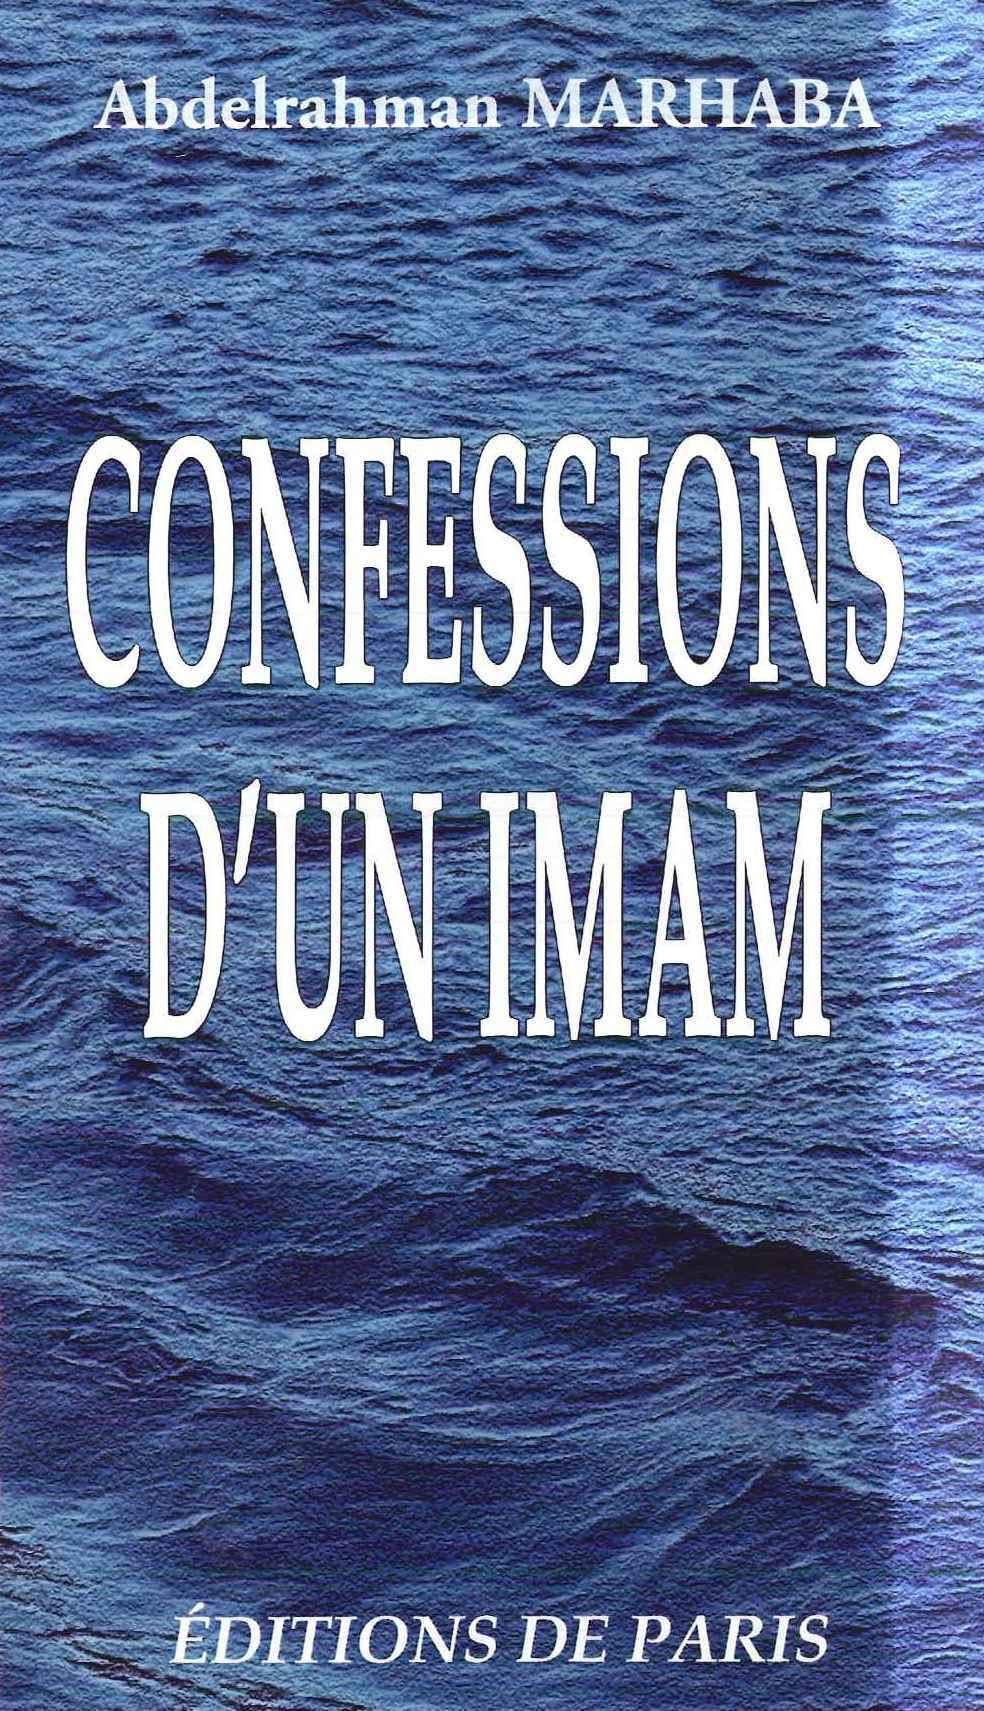 Confessions d'un imam